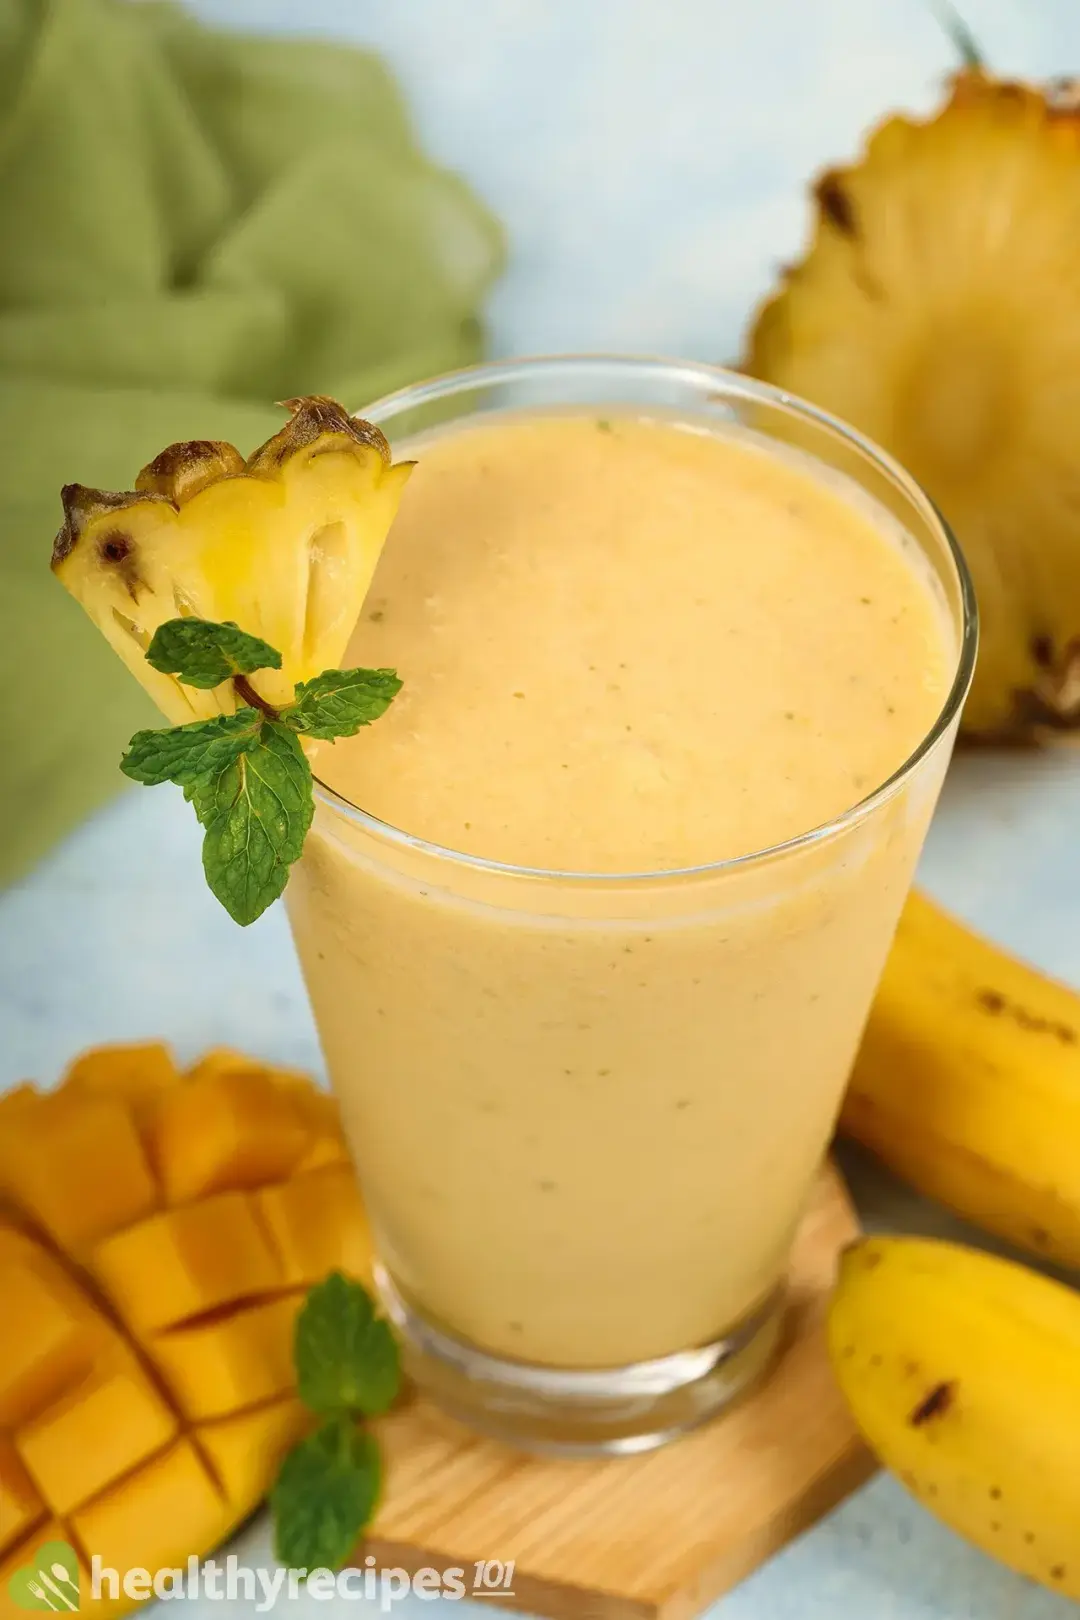 Mango Pineapple Banana Smoothie Recipe